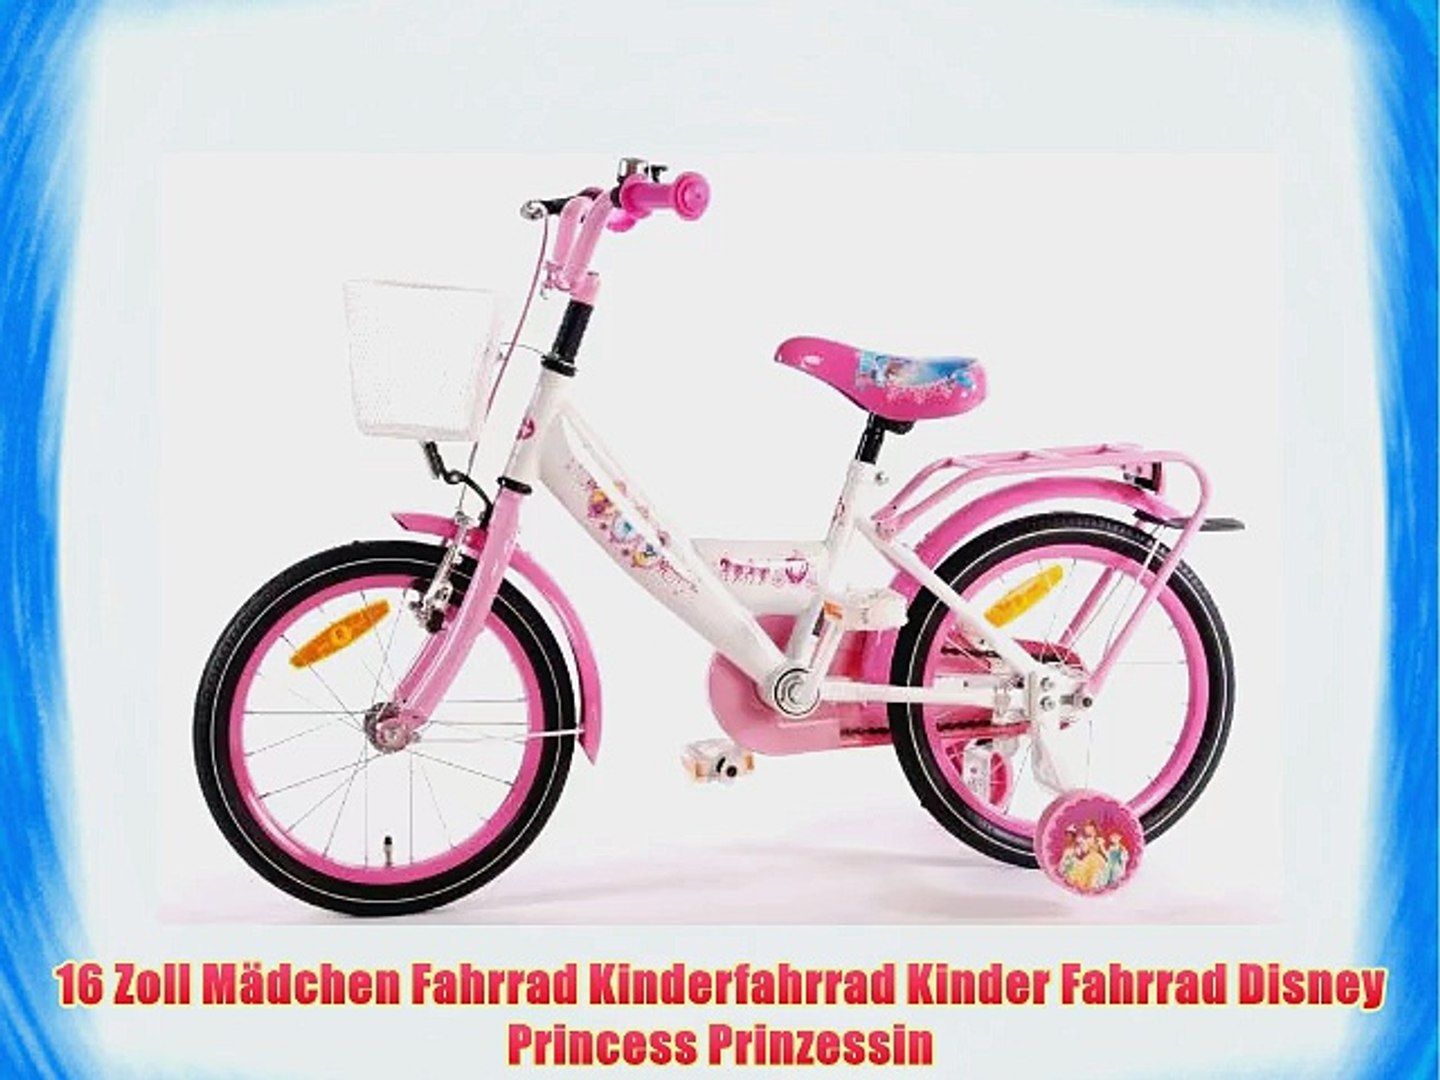 arcona pegasus fahrrad 20 zoll kinderfahrrad test ebay